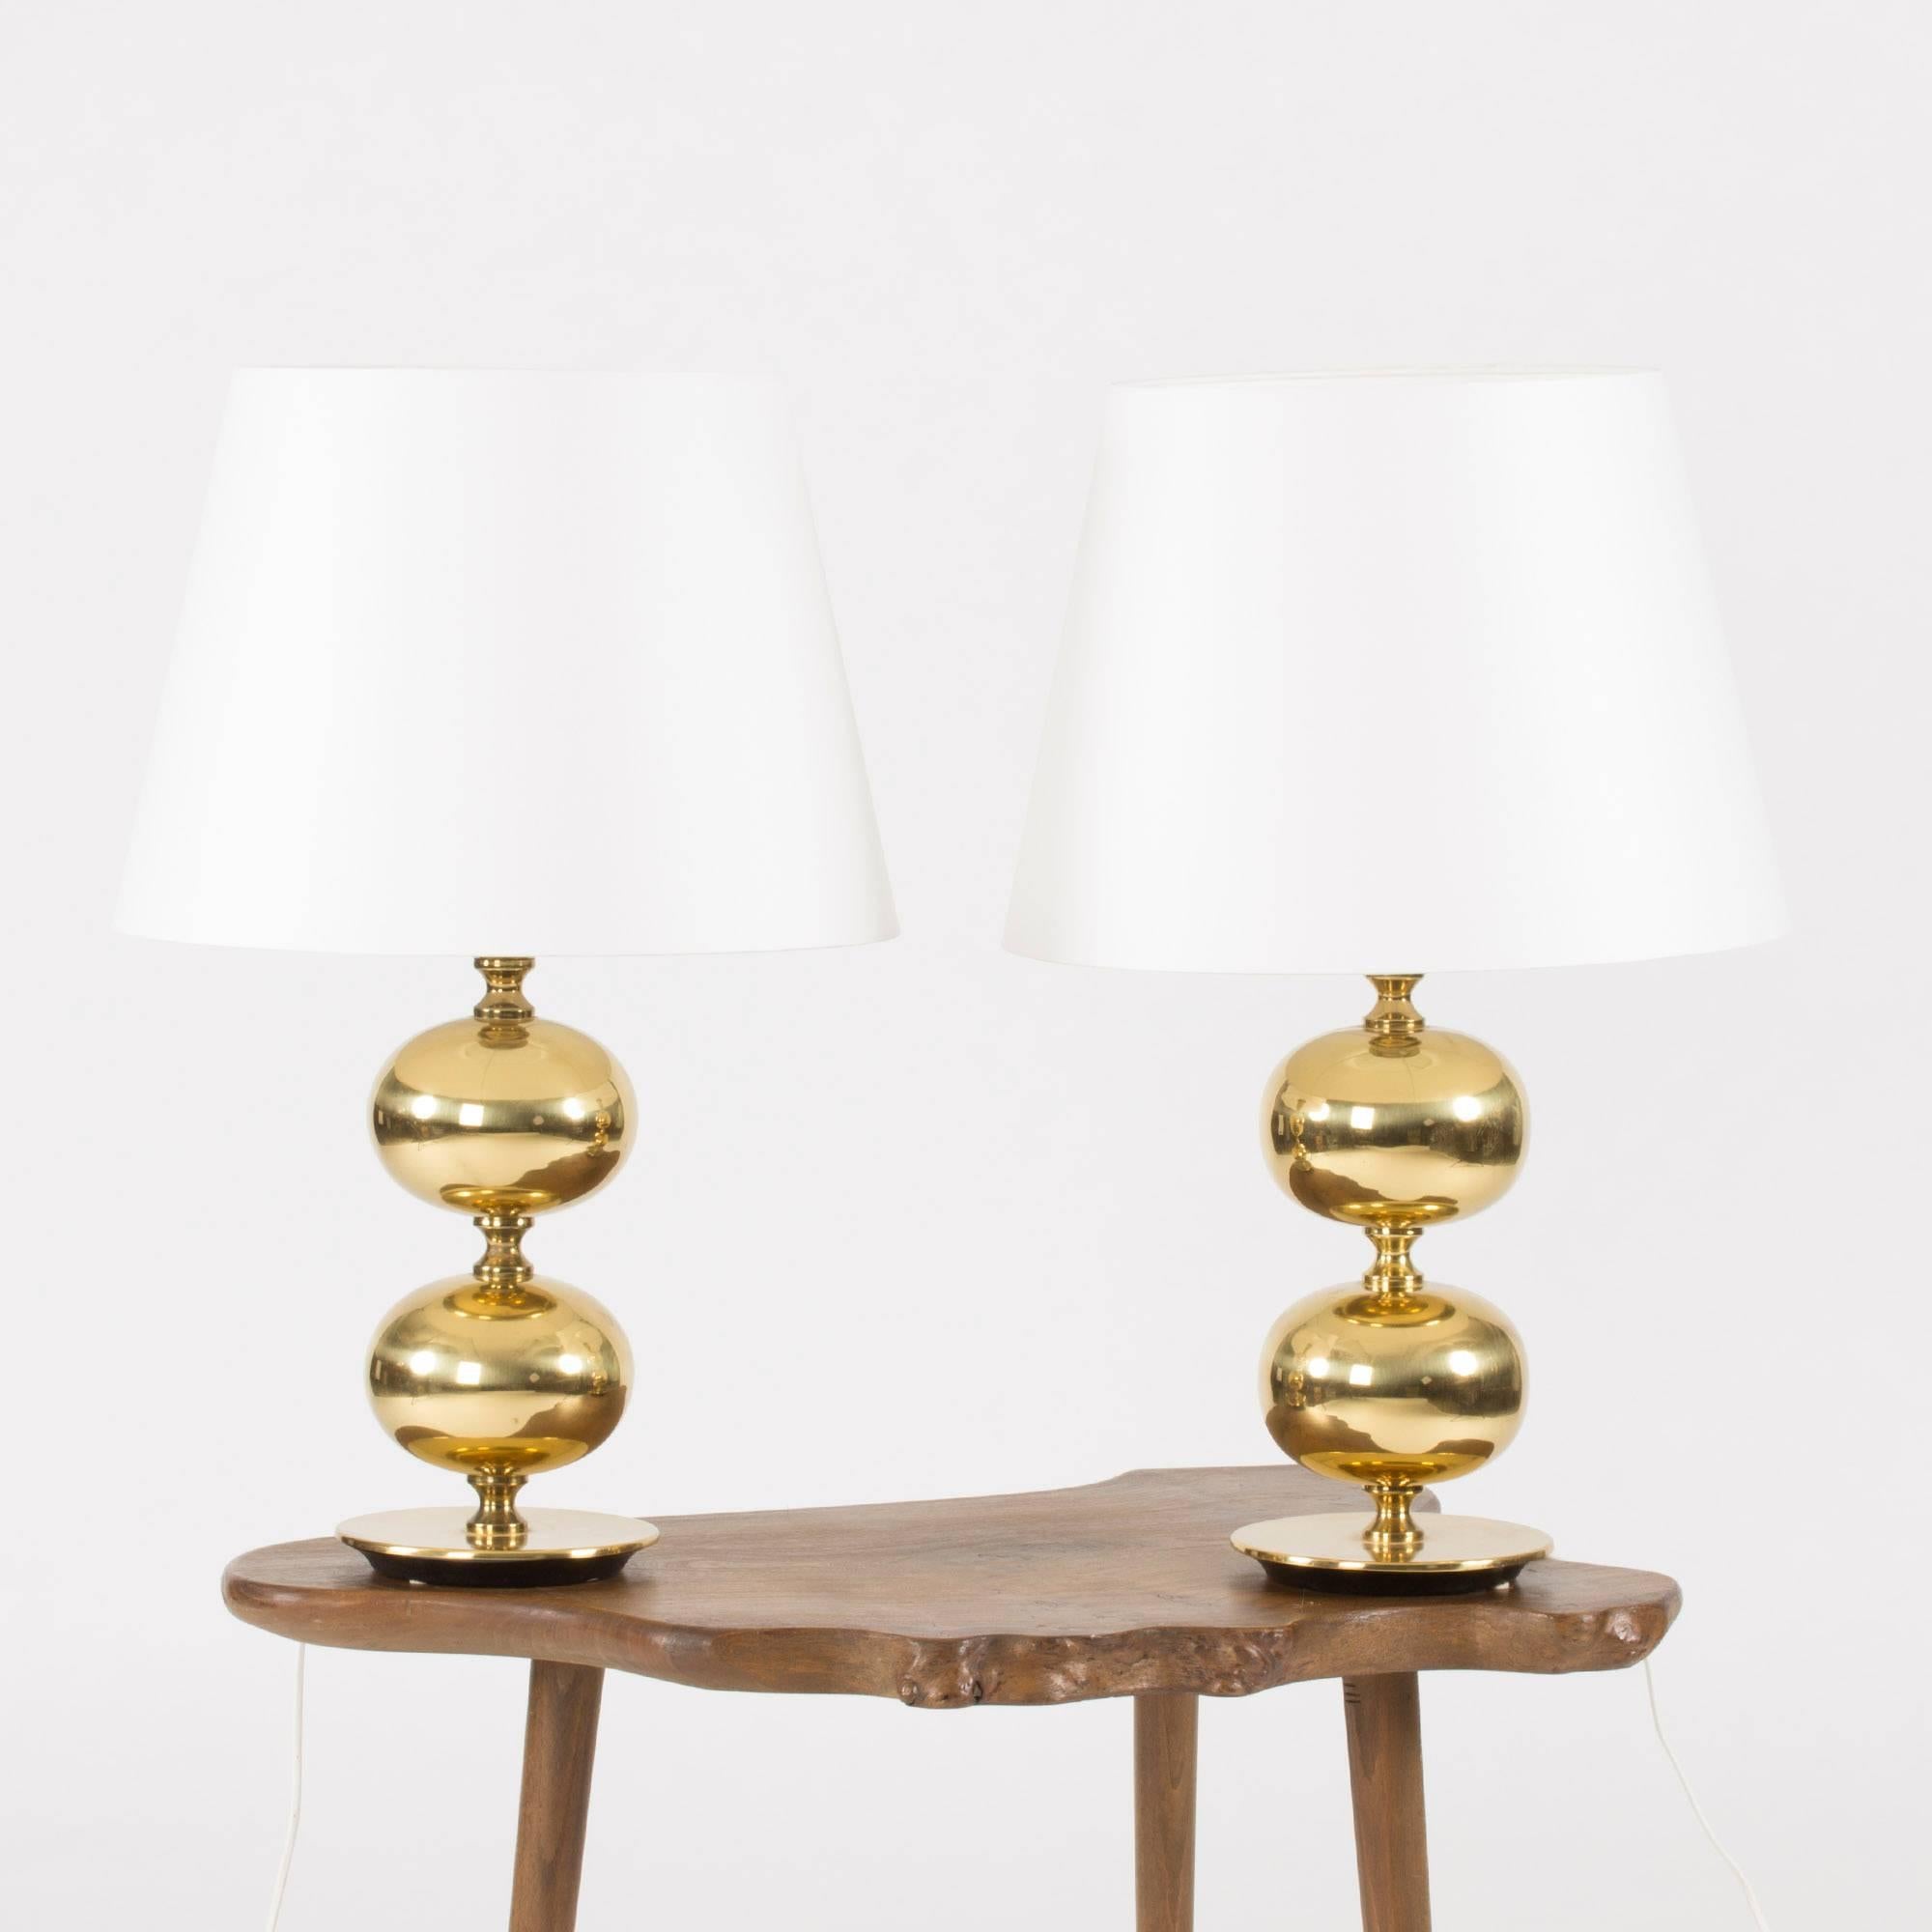 Pair of beautiful bulbous brass table lamps with white lamp shades by Henrik Blomqvist for Tranås Stilarmatur.